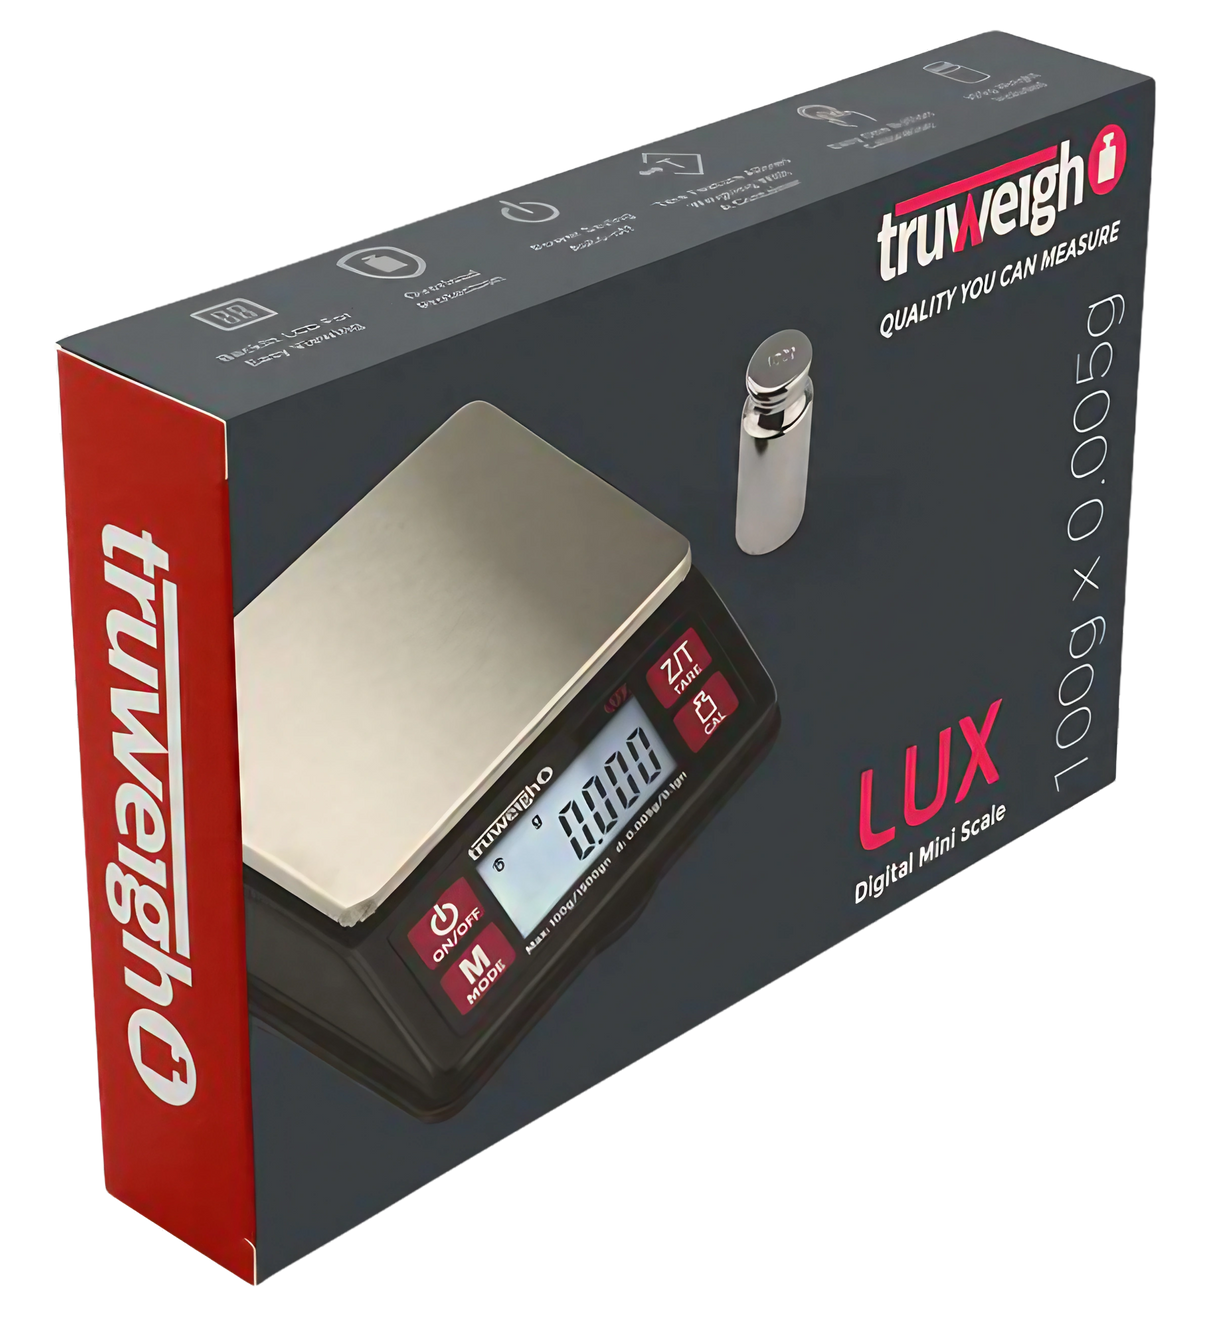 Truweigh Black Lux Digital Mini Scale on box, precise 0.005g readability, battery-powered, portable design